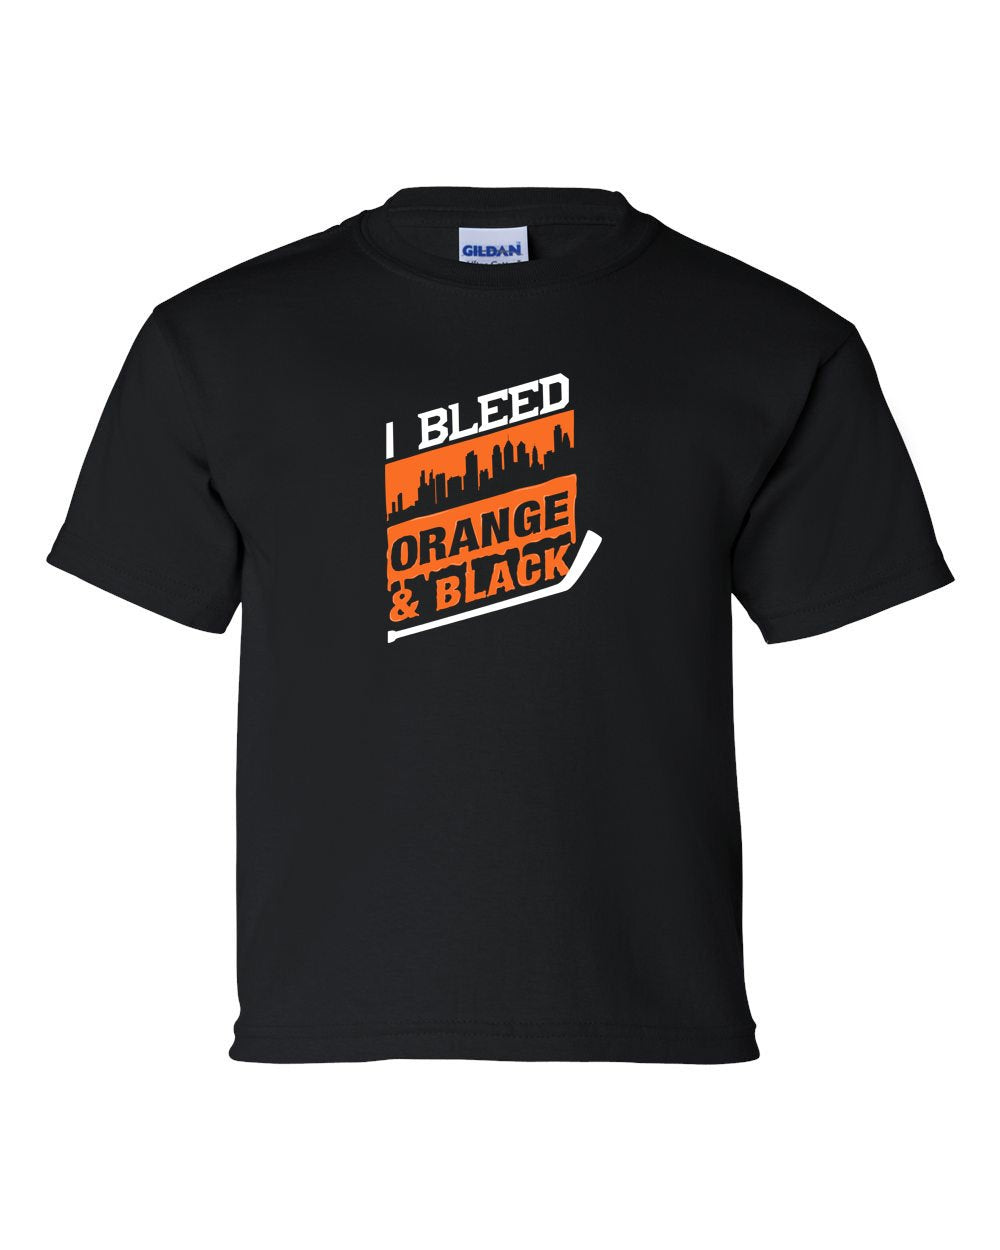 I Bleed Orange and Black KIDS T-Shirt